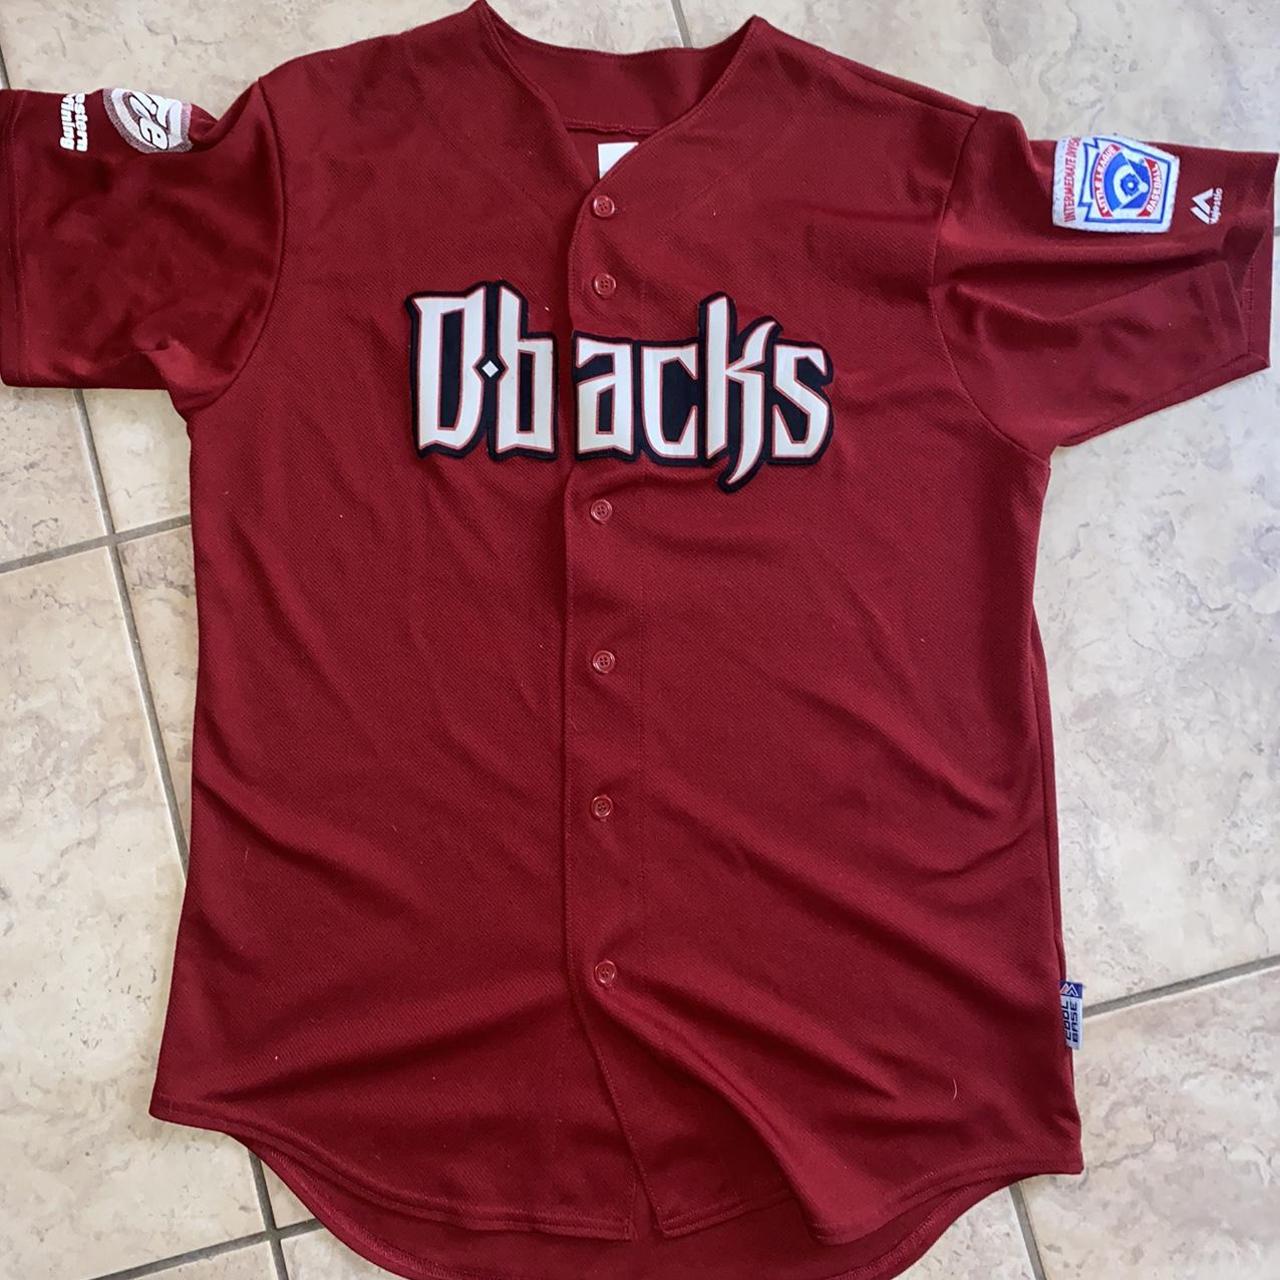 Arizona Diamondbacks Kids' Shirt - Red